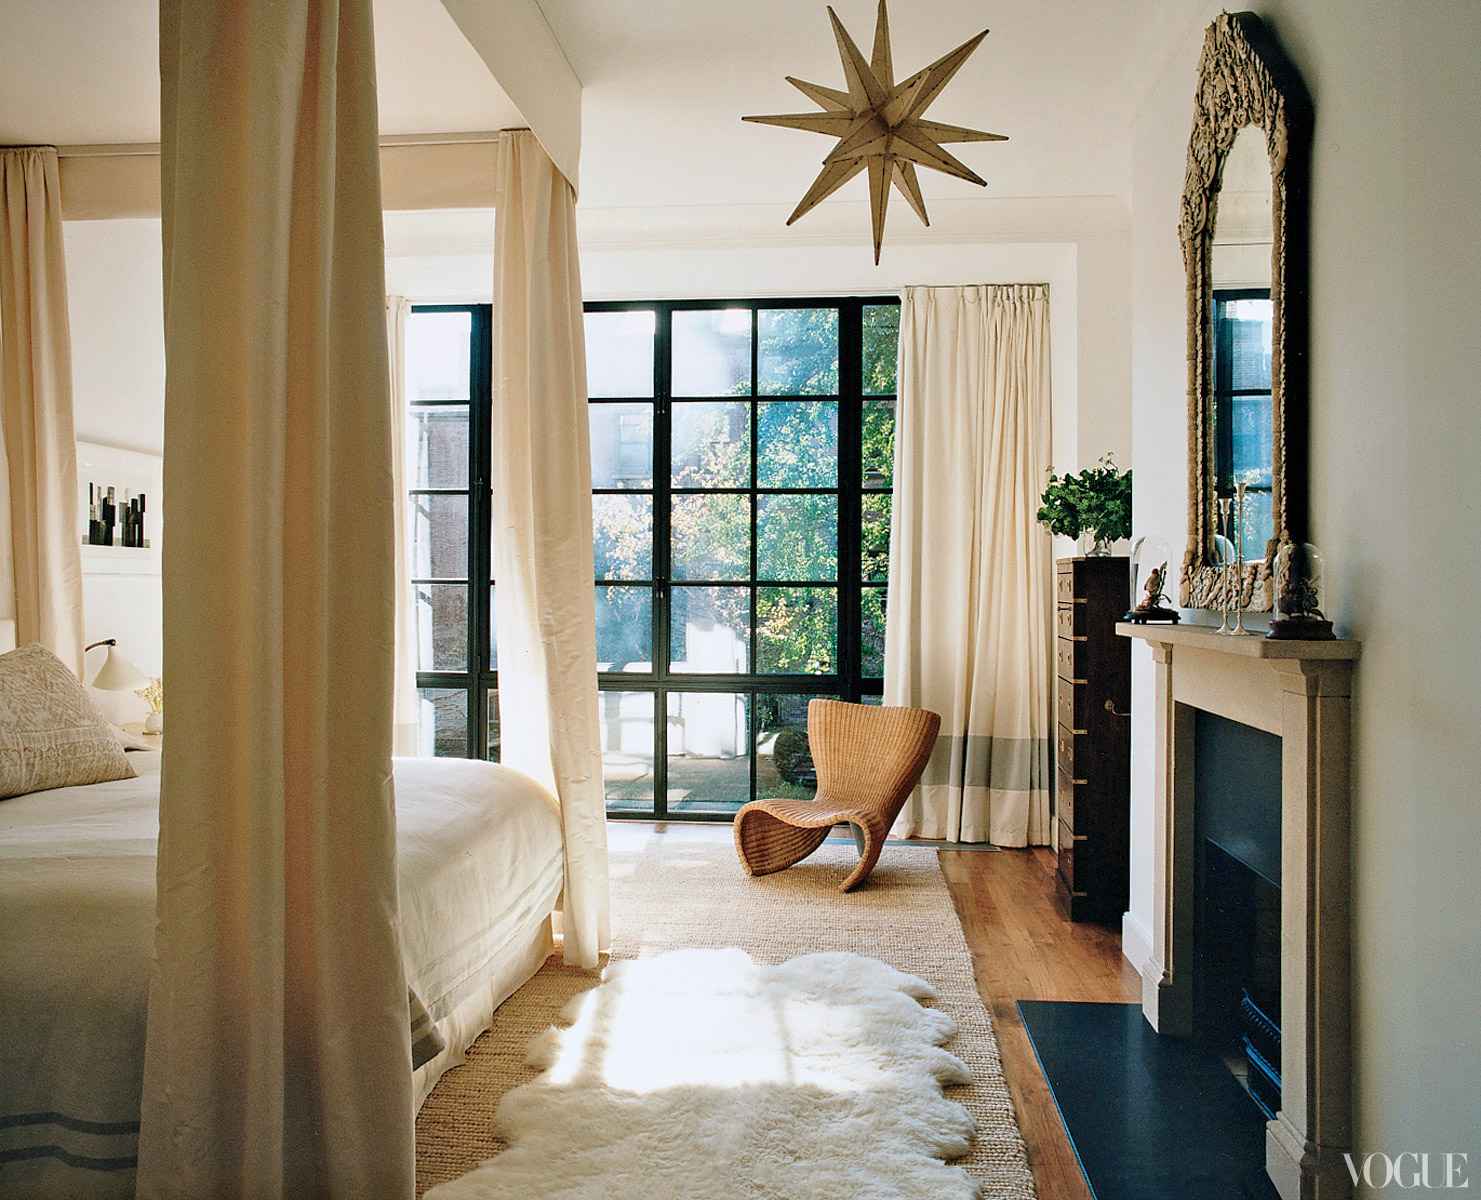 1st Home Design Interior: Tabitha Simmons's Manhattan Home